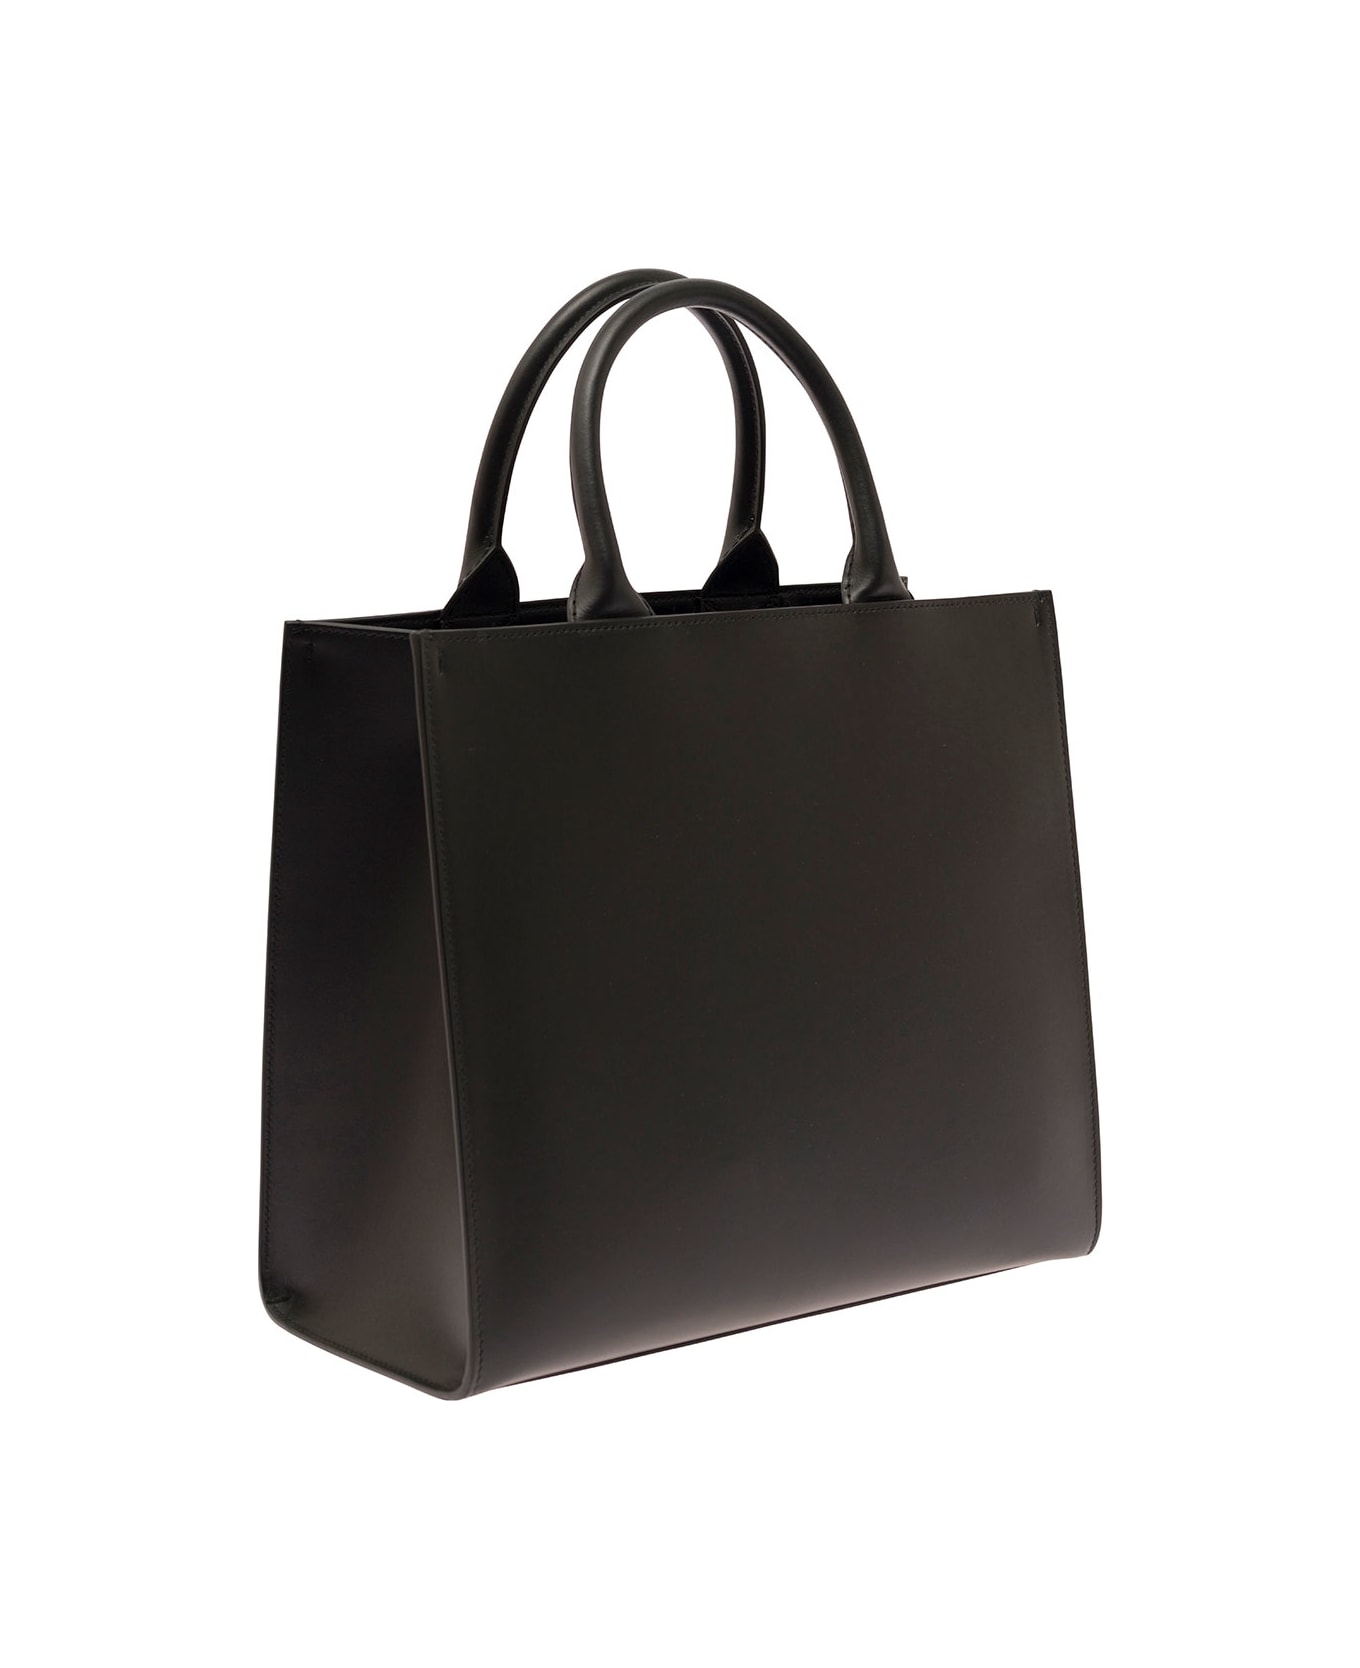 Dolce & Gabbana 'dg Daily Medium' Black Handbag With Dg Logo Detail In Smooth Leather Woman - Black